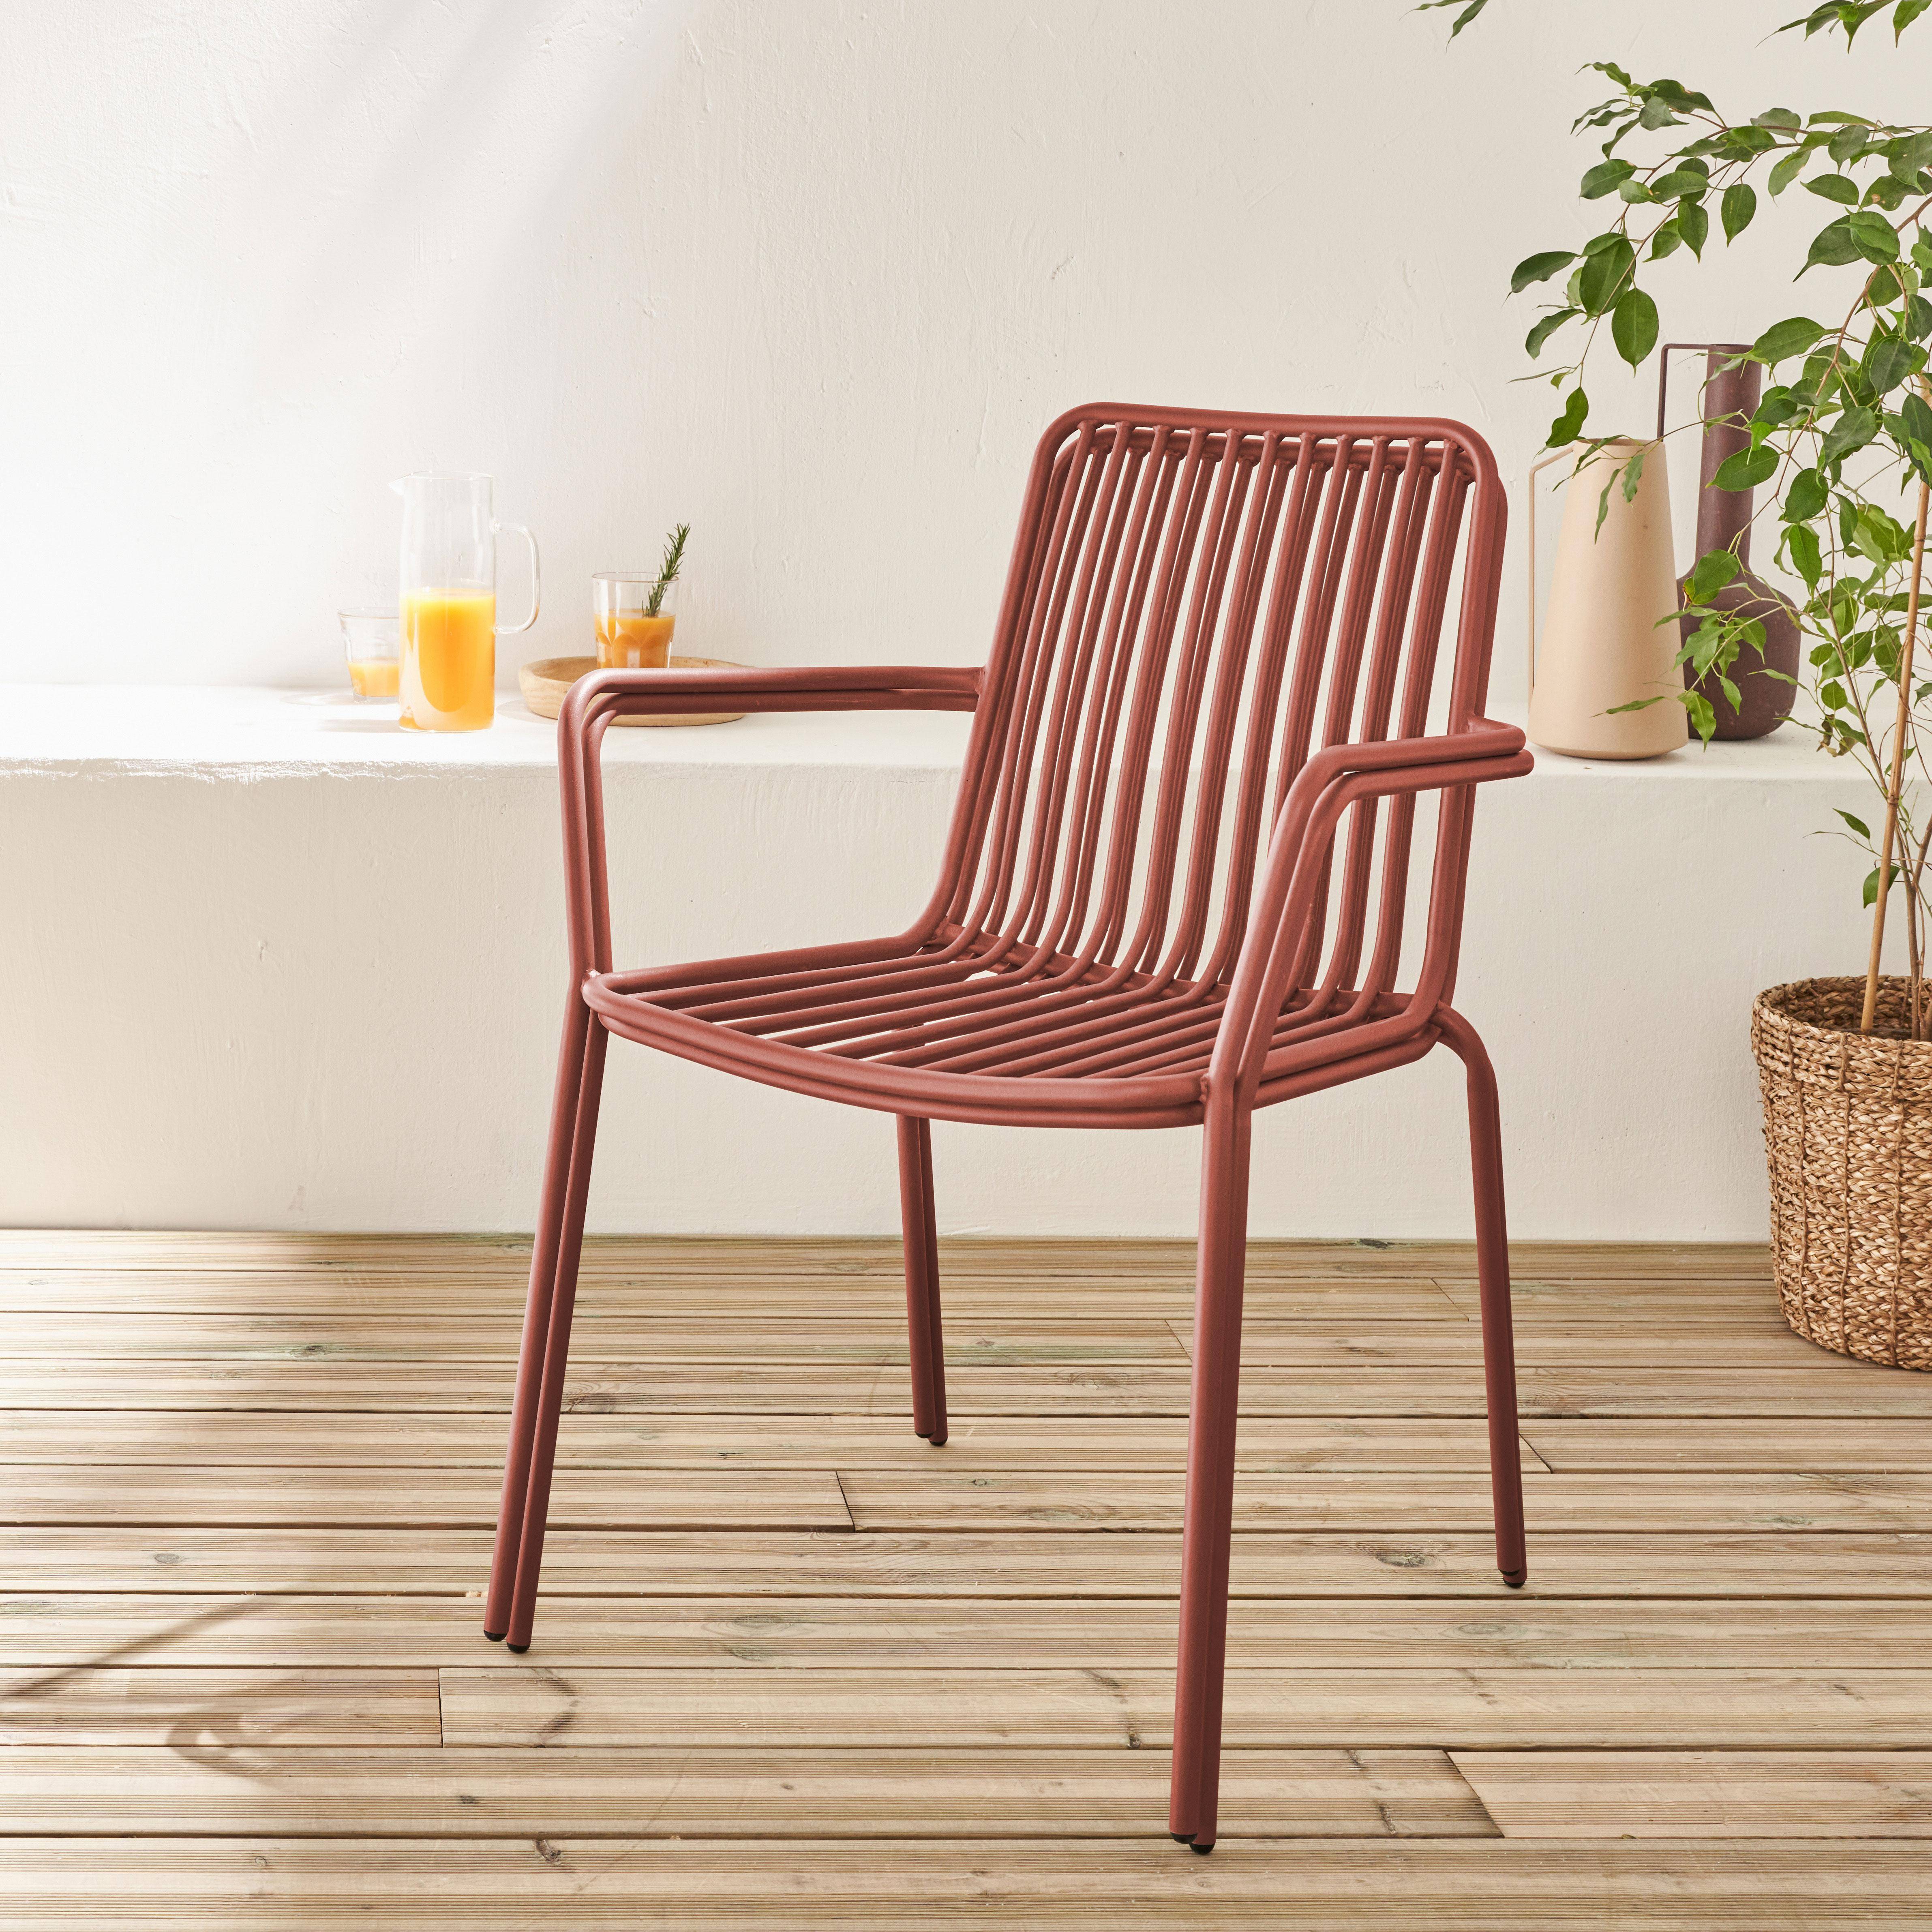 2er Set stapelbare terrakottafarbene Stühle aus Stahl, mit Armlehnen - Florida,sweeek,Photo2